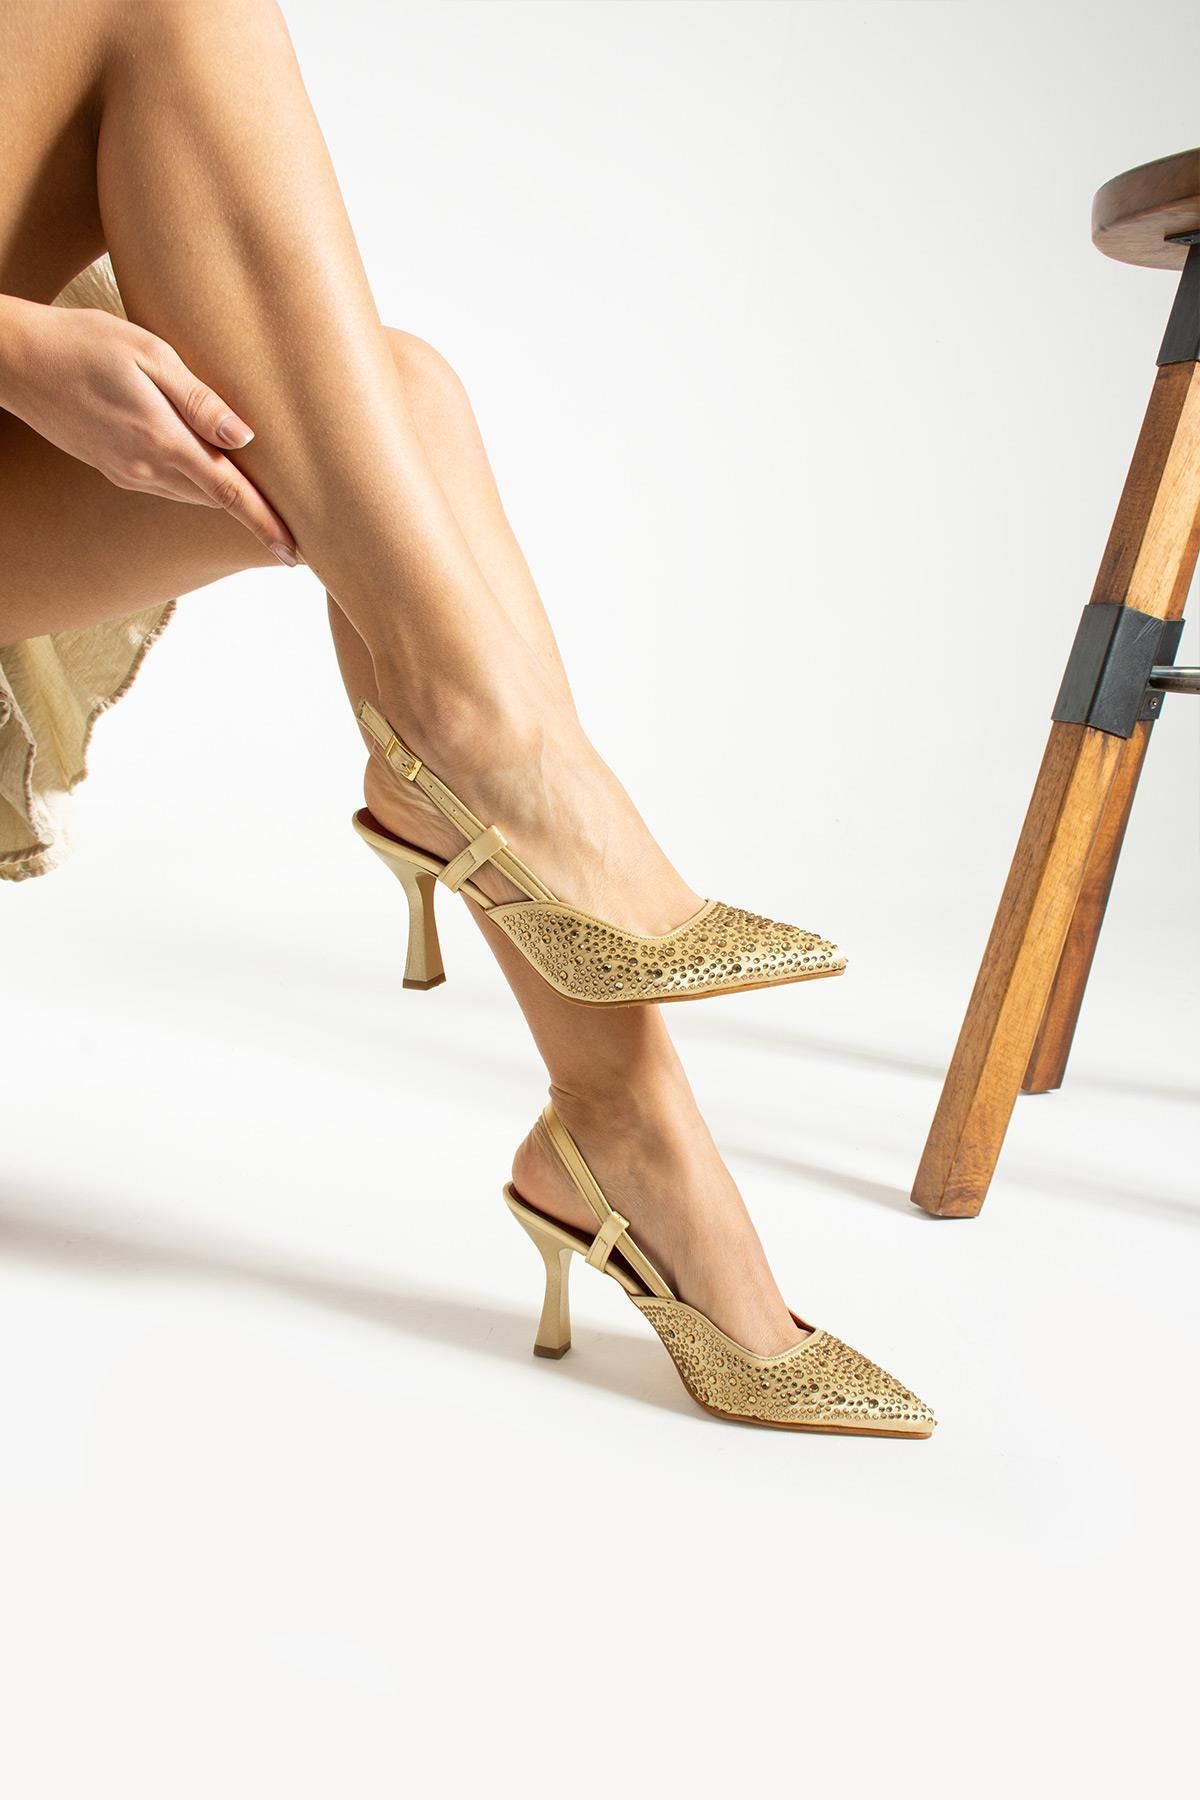 Tulin Shoes Hera Taş Baskı Detay Topuklu Altın